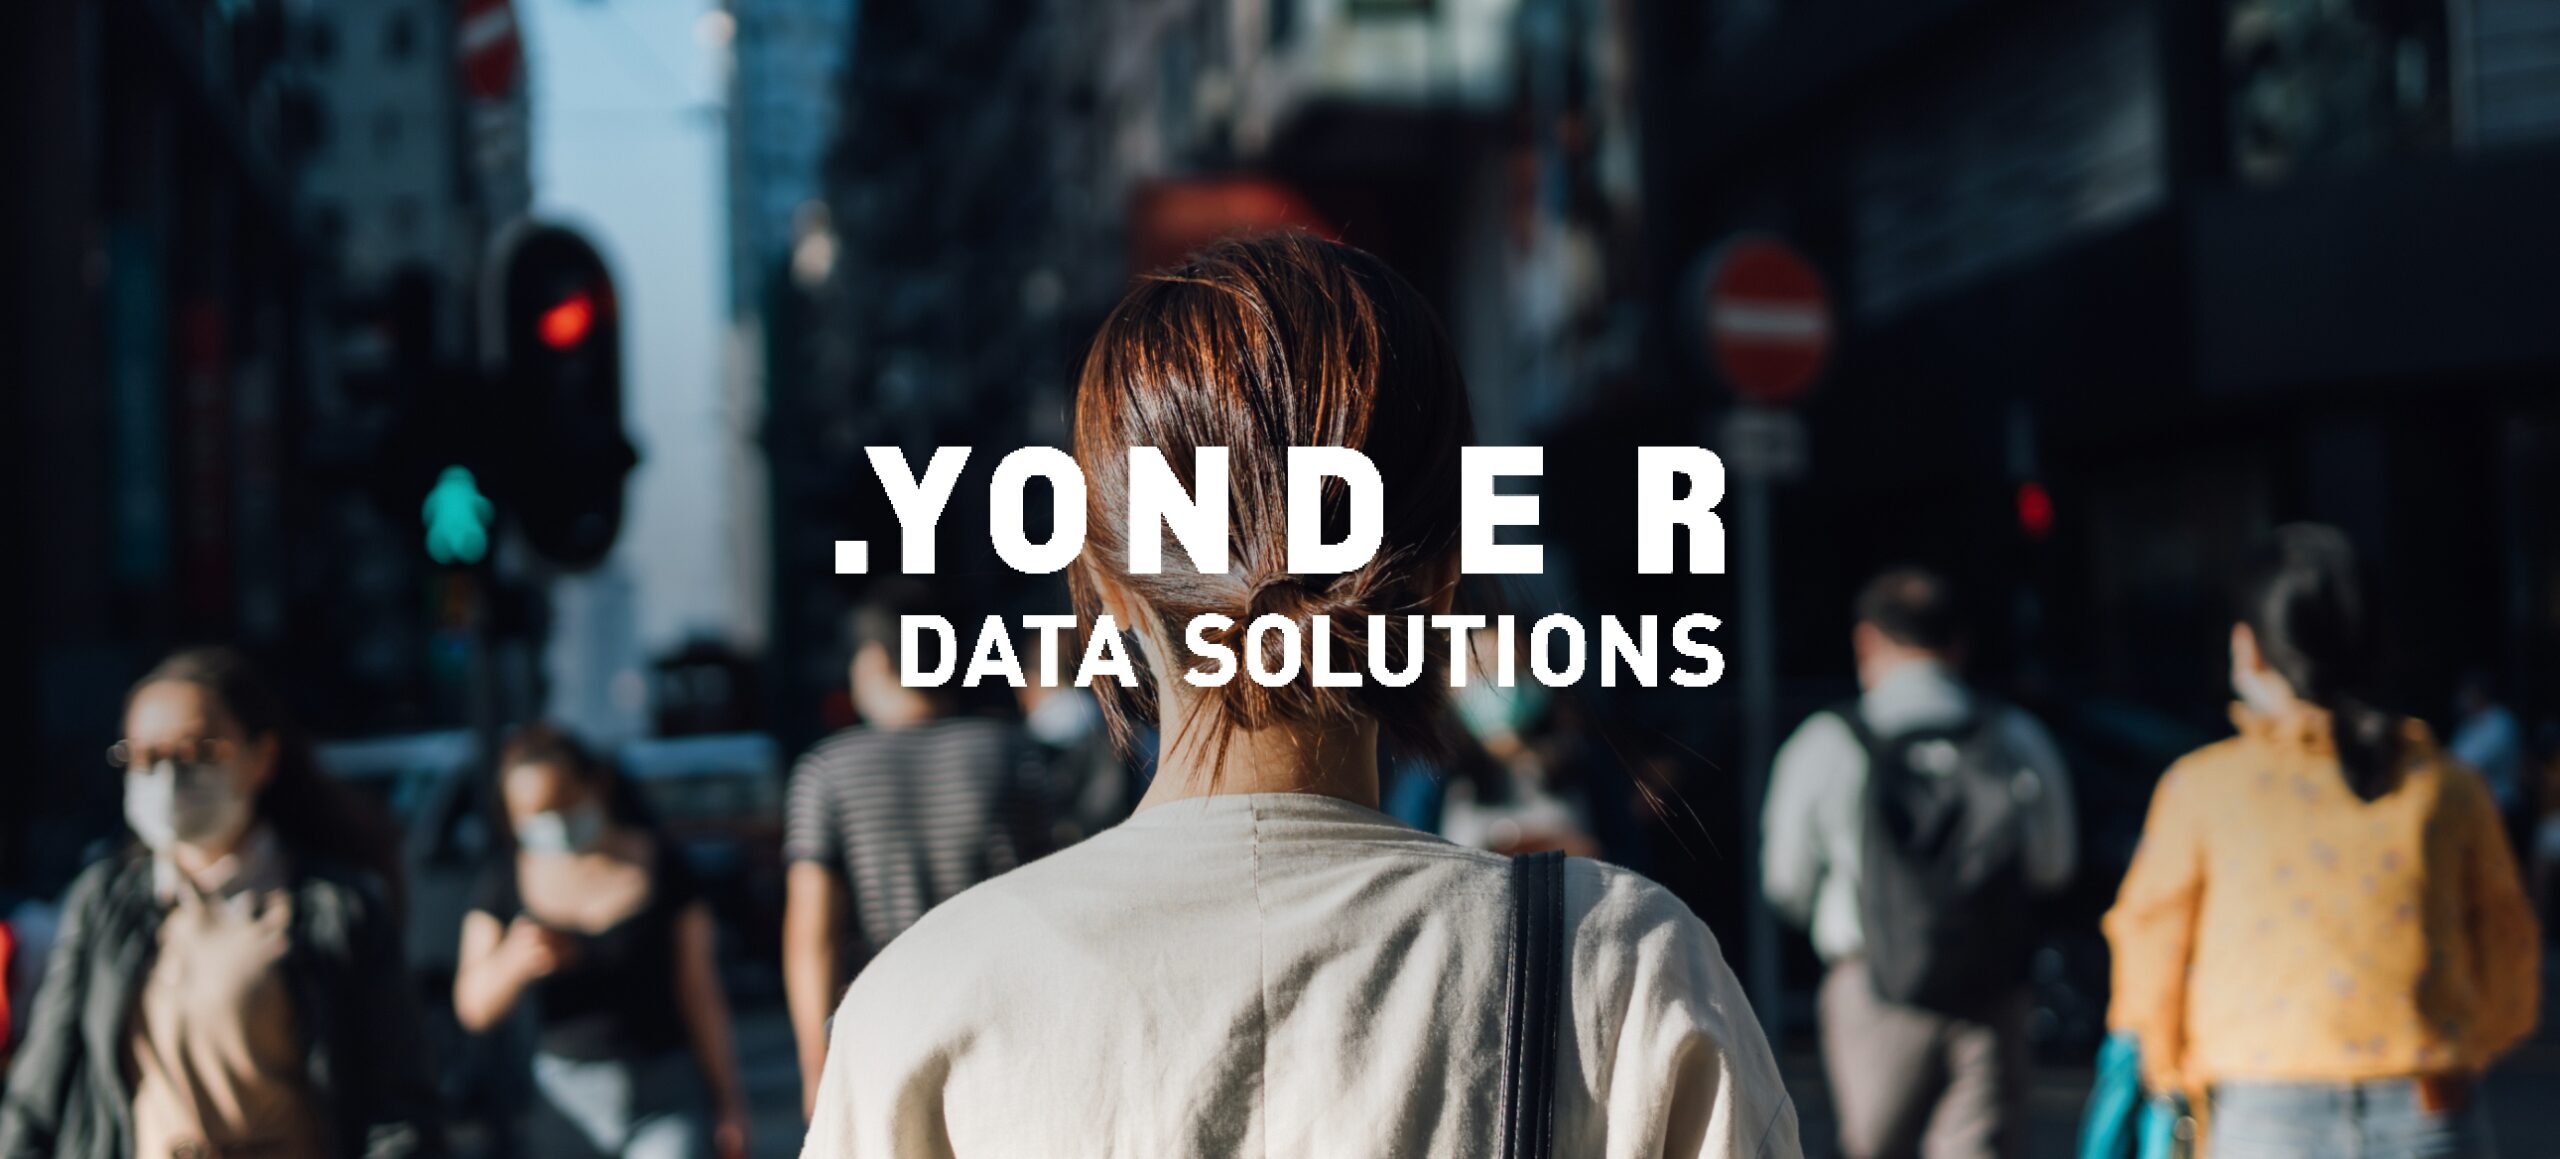 Yonder Data Solutions